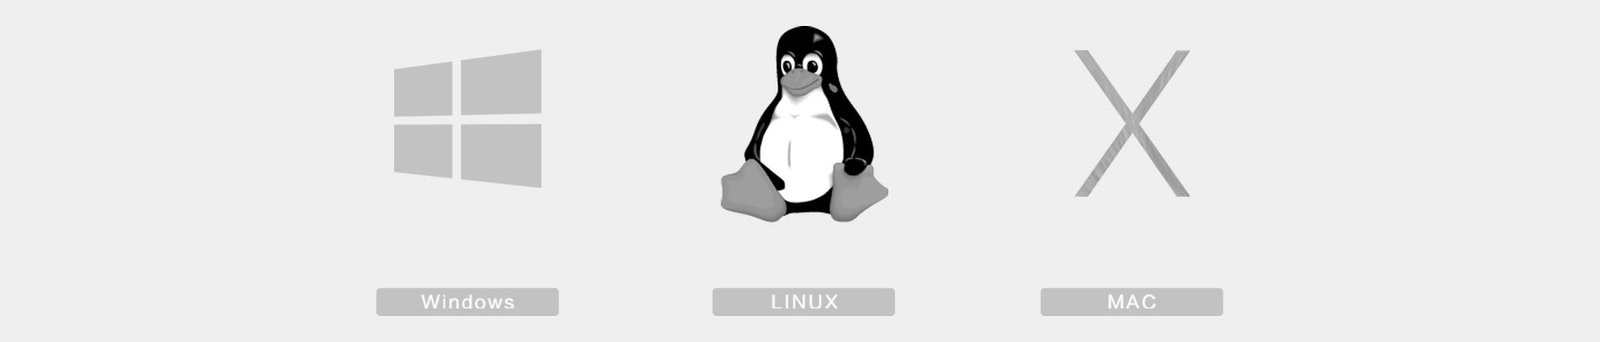 linux vs windows vs macOSX